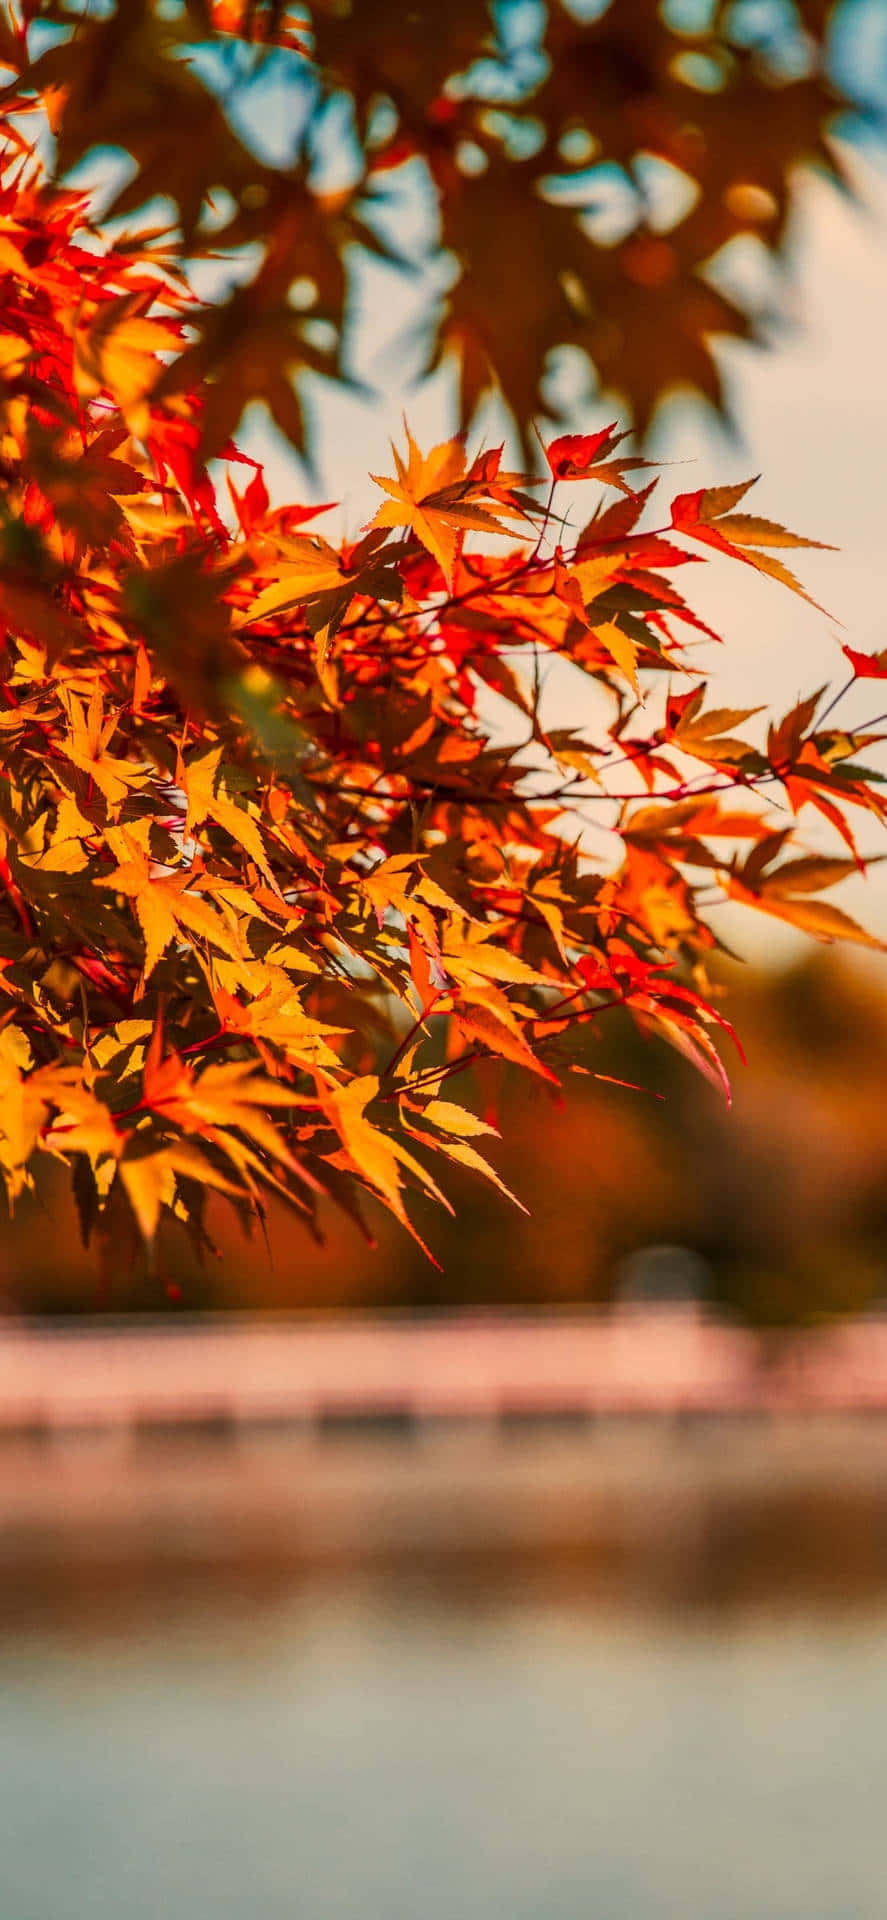 autumn leaves on a tree near a lake Wallpaper